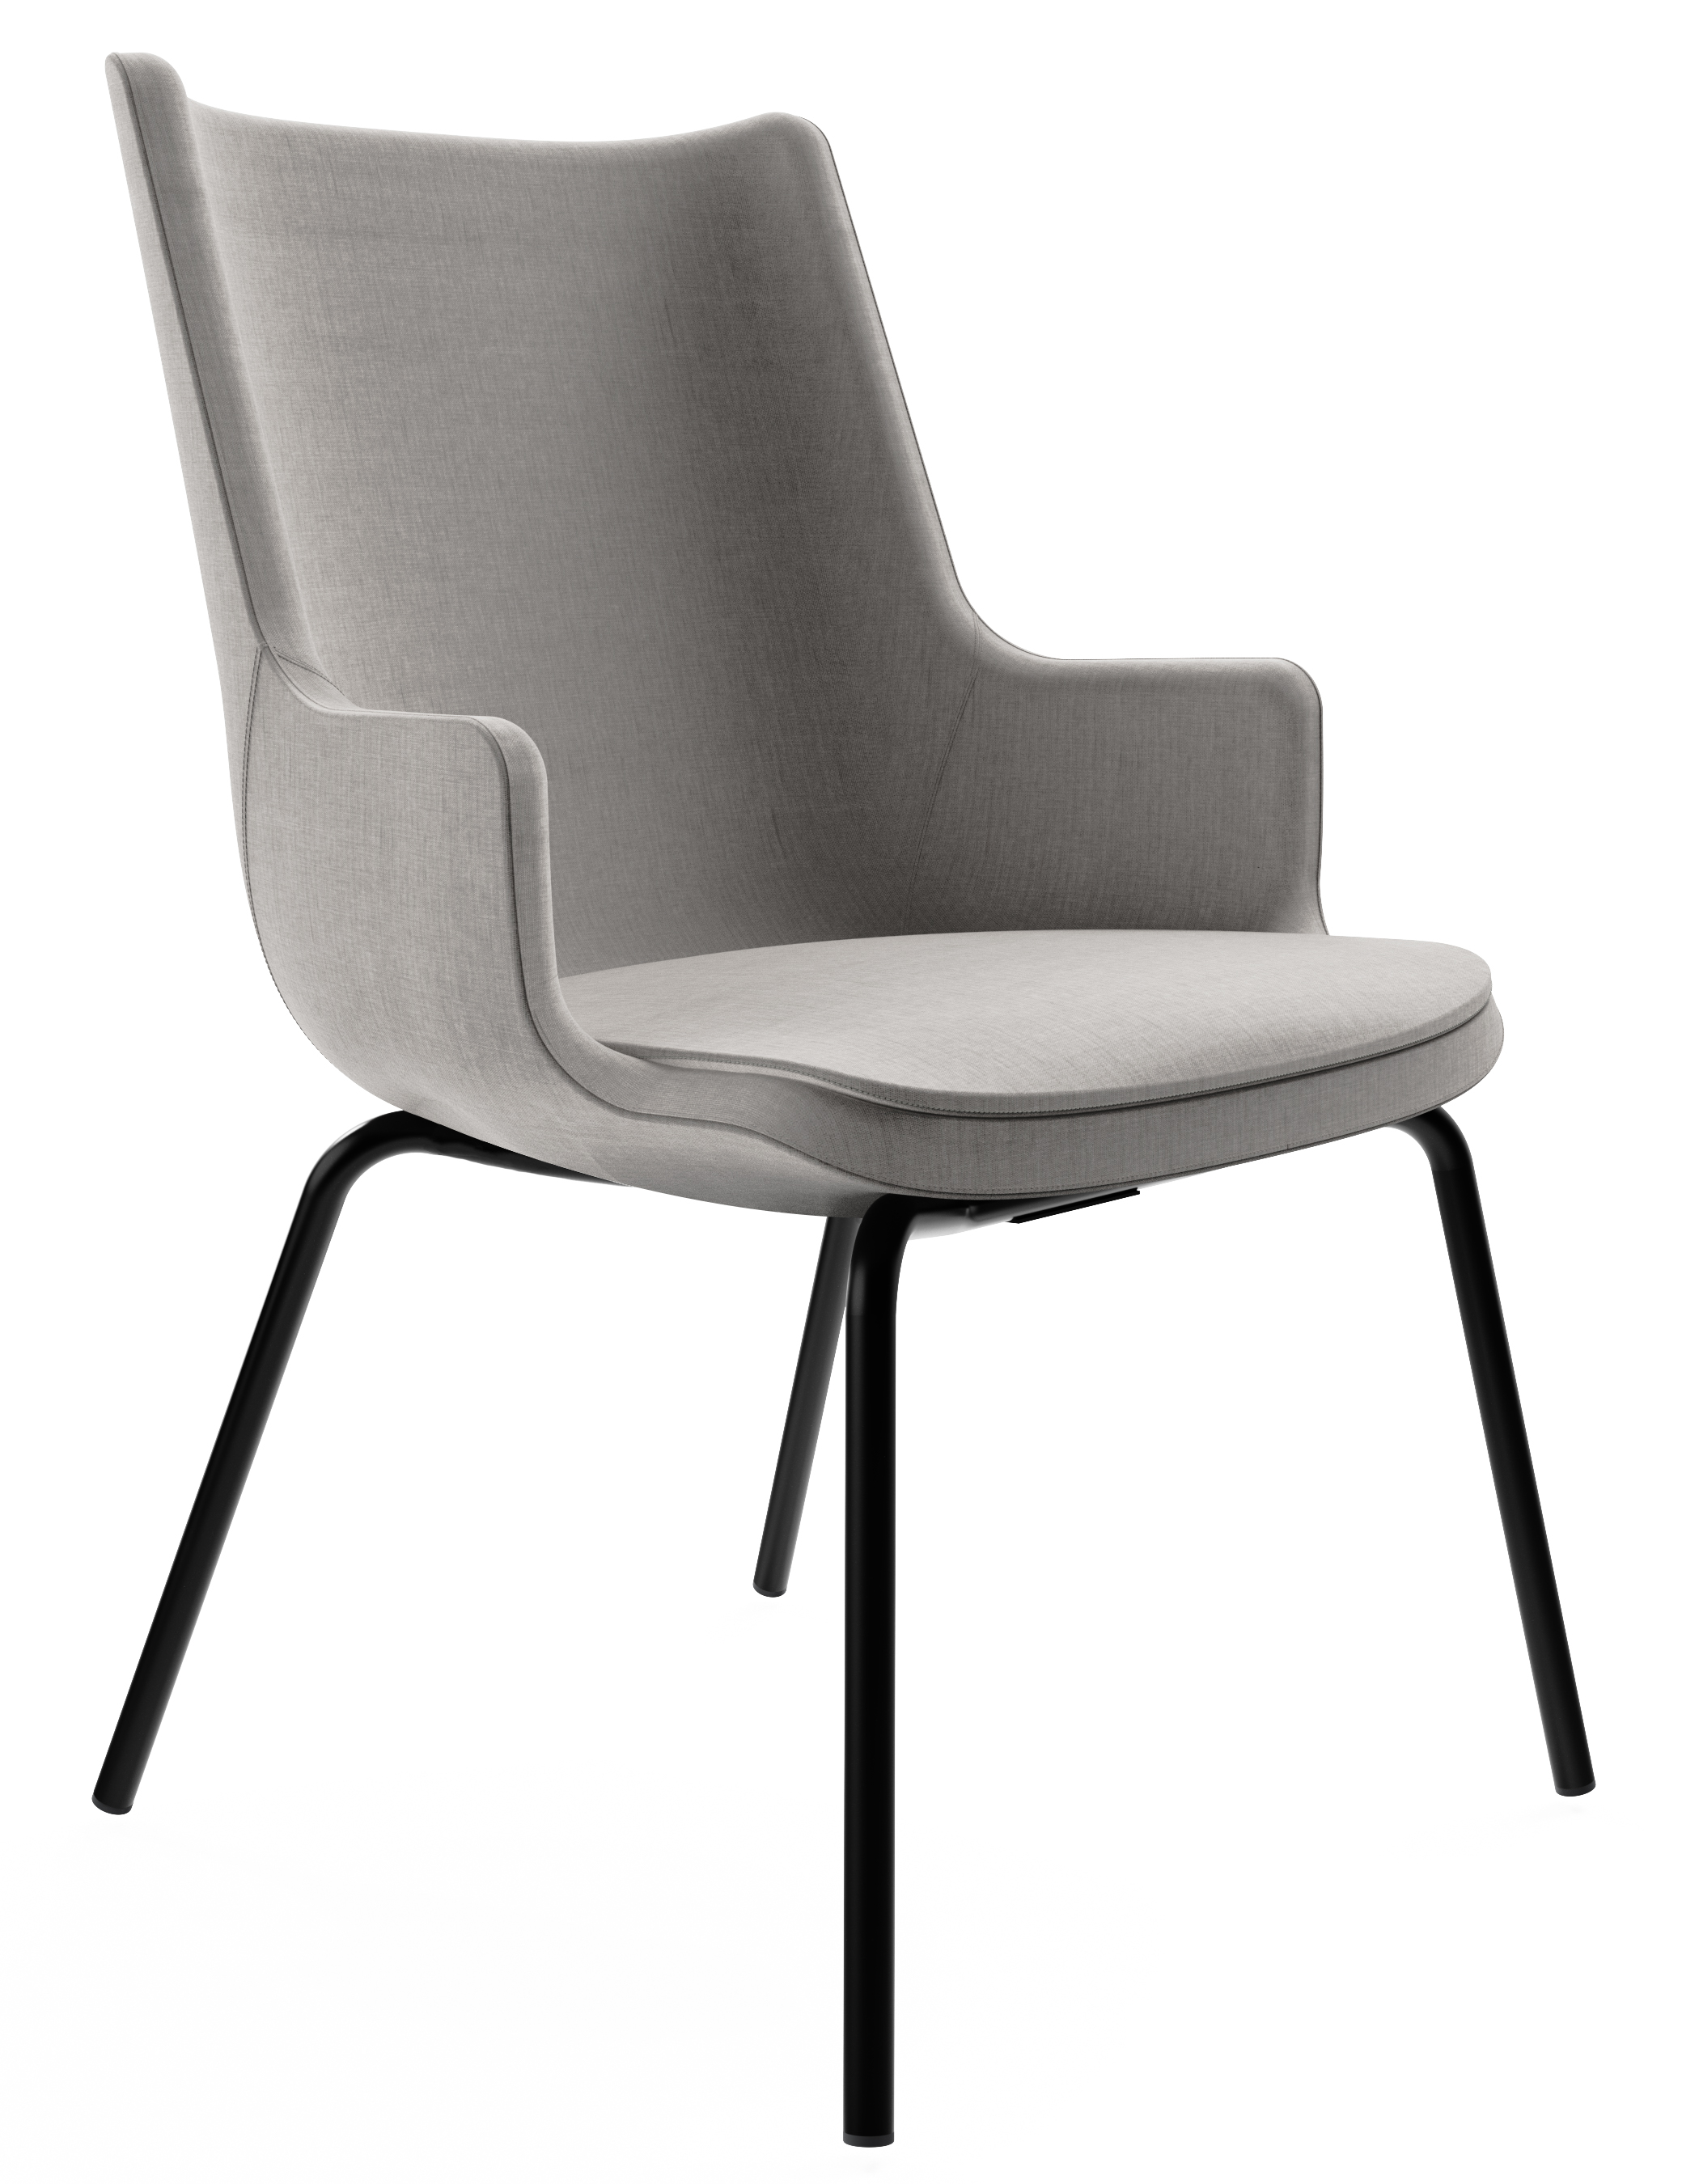 WS - Contour chair - Mid, 4 leg black base (Front angle)